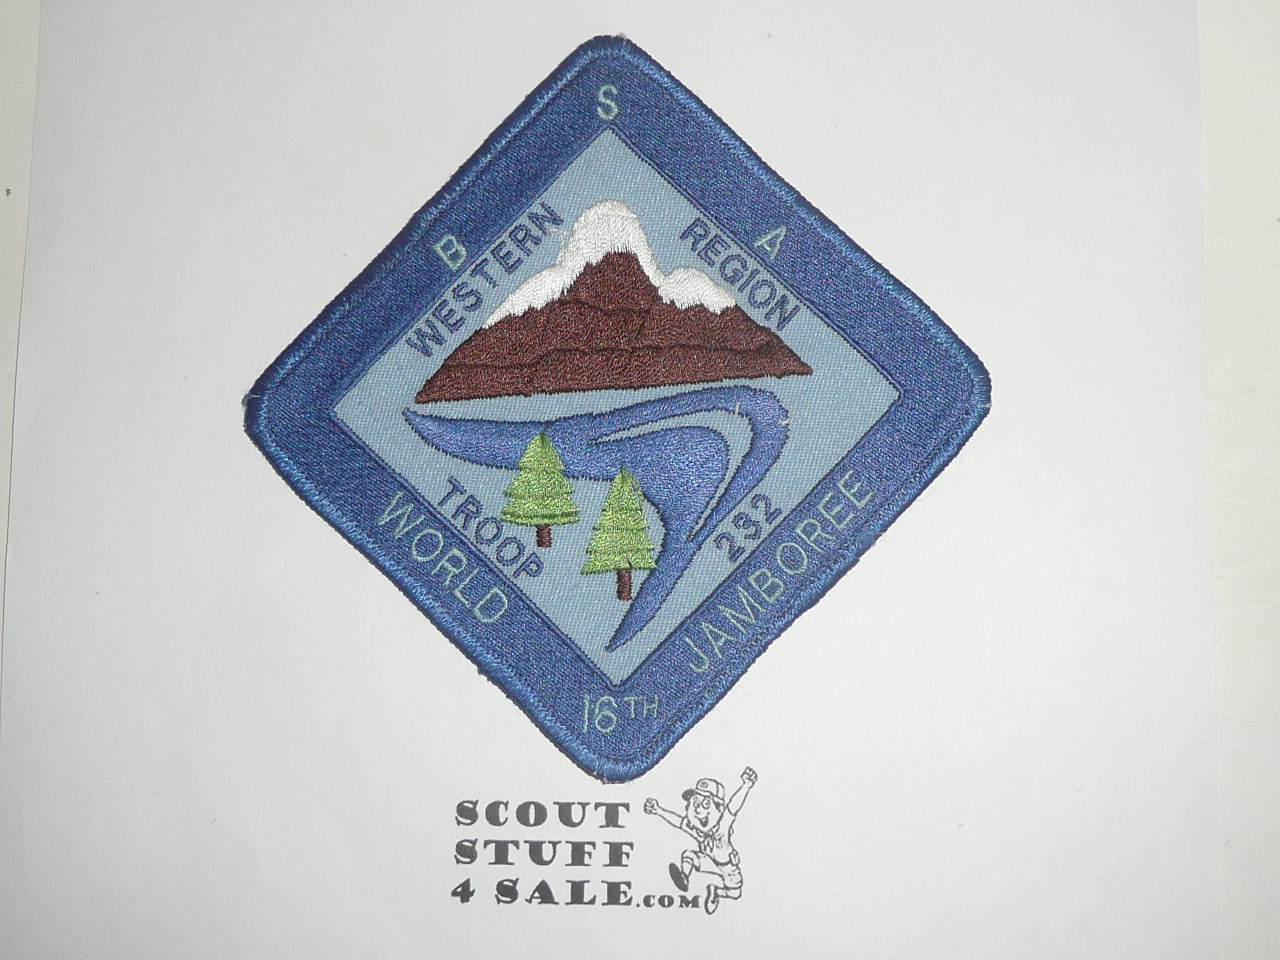 1987-88 World Jamboree JSP - Western Region Troop 232 Jacket Patch